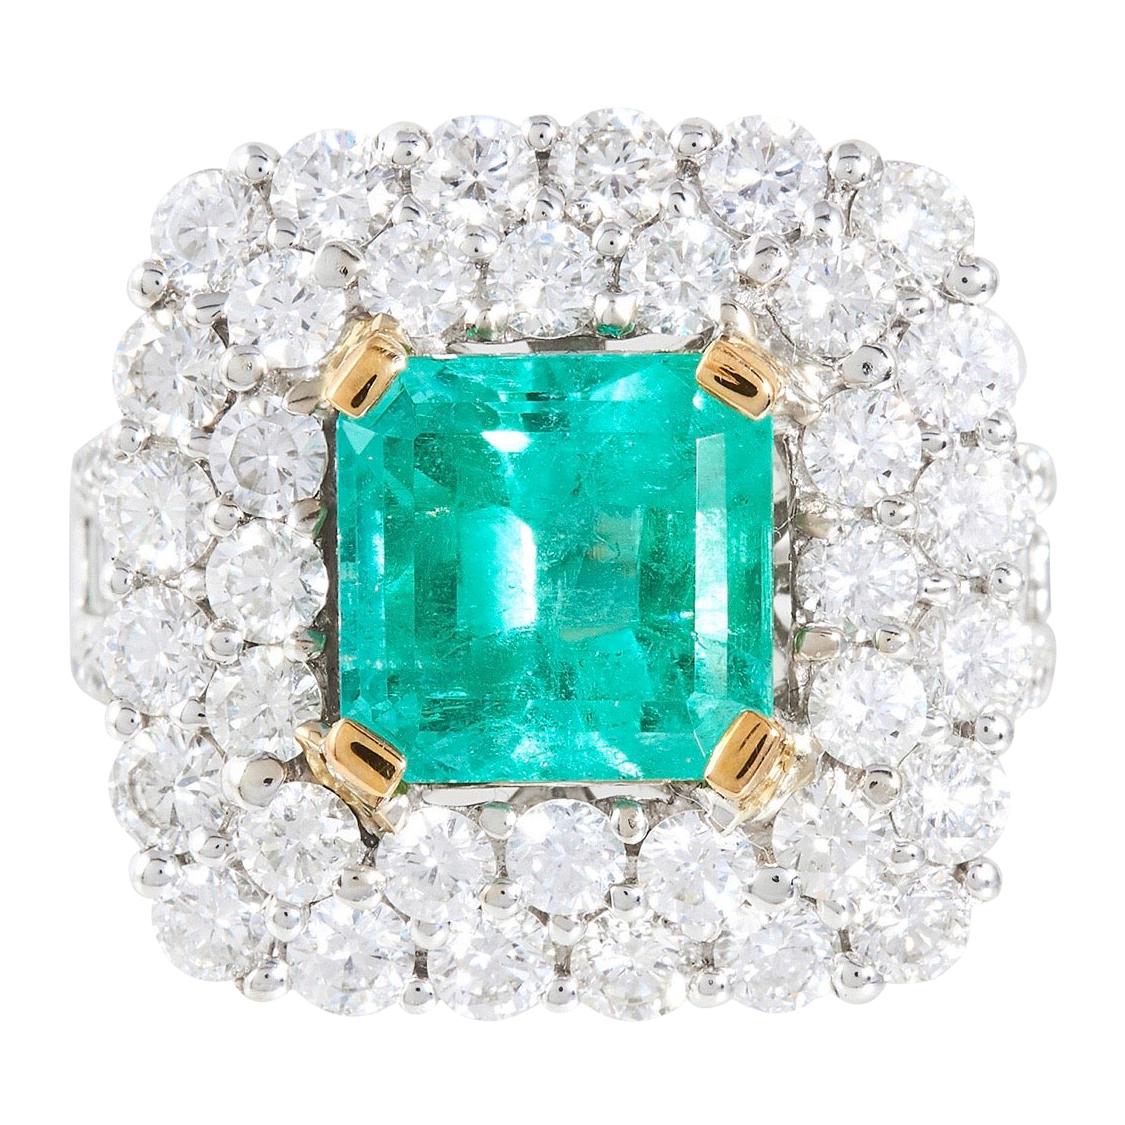 4.88 Ct Colombian Emerald 5.03 Ct Diamond Dress Ring Set in 18 Karat White Gold